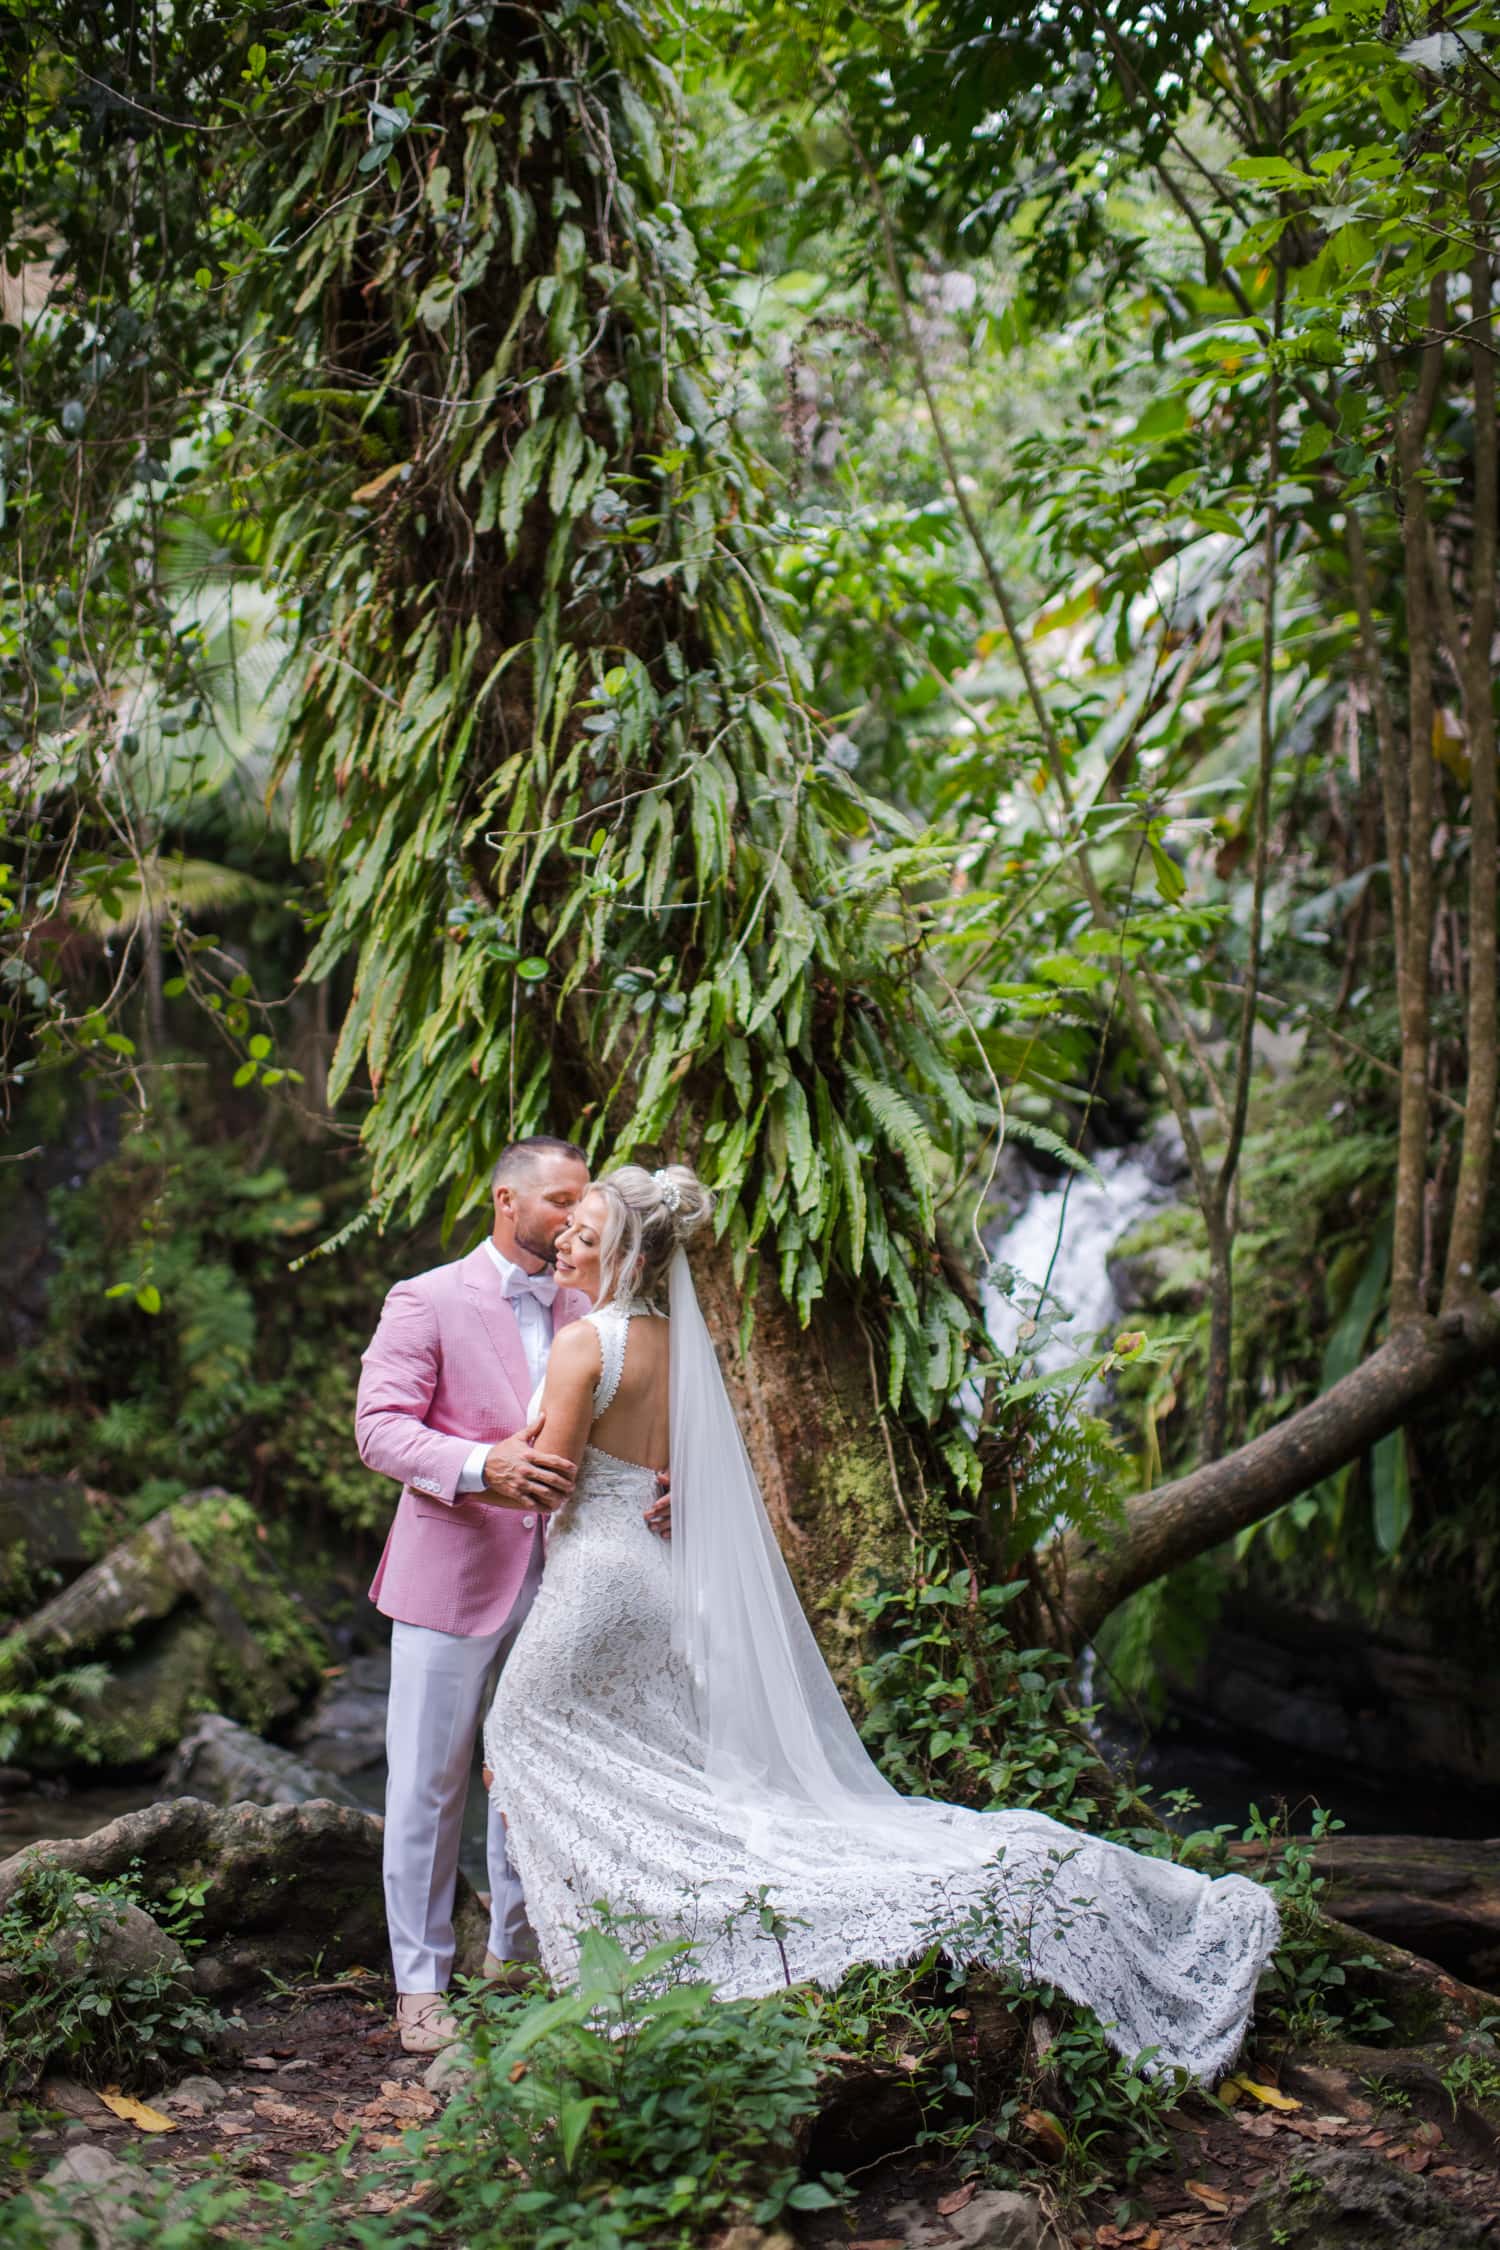 yunque-rainforest-puerto-rico-elopement-wedding-portraits-006.jpg